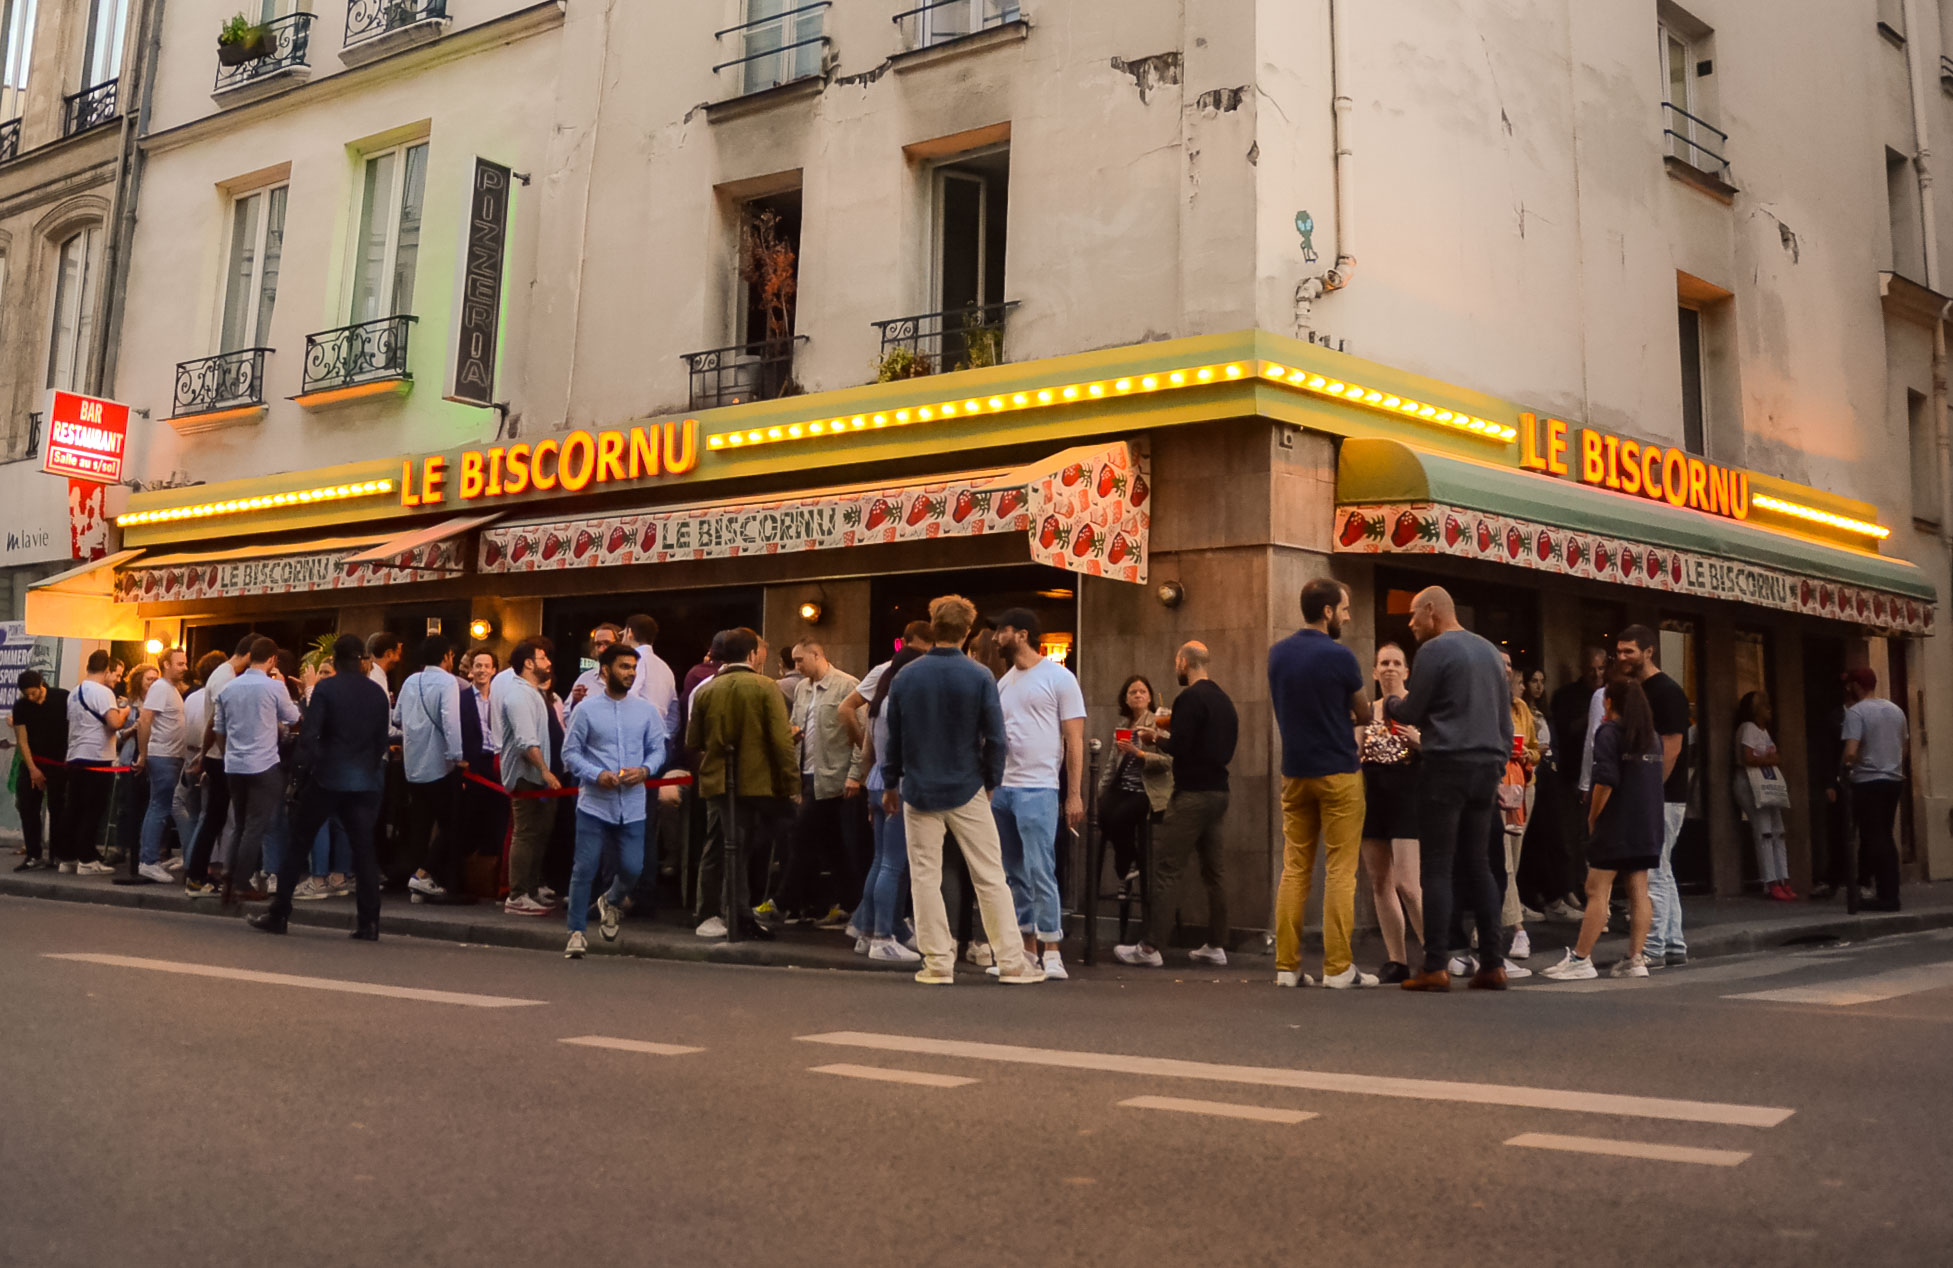 le-biscornu-paris-bar-restaurant-club-photo-19541